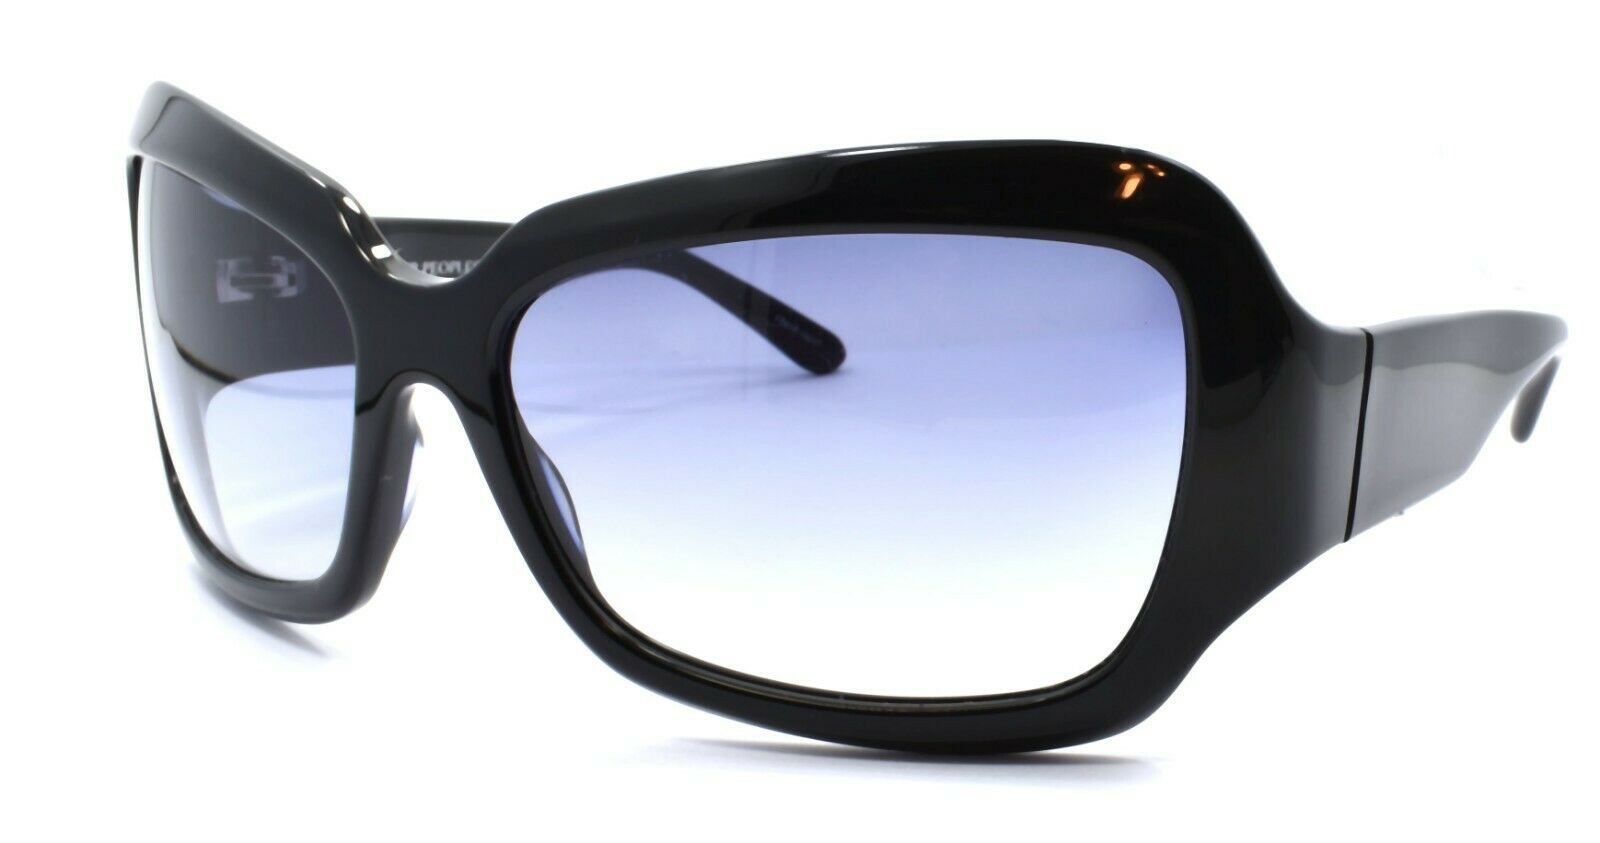 1-Oliver Peoples Athena BK Women's Sunglasses Black / Blue Gradient 115 mm JAPAN-Does not apply-IKSpecs